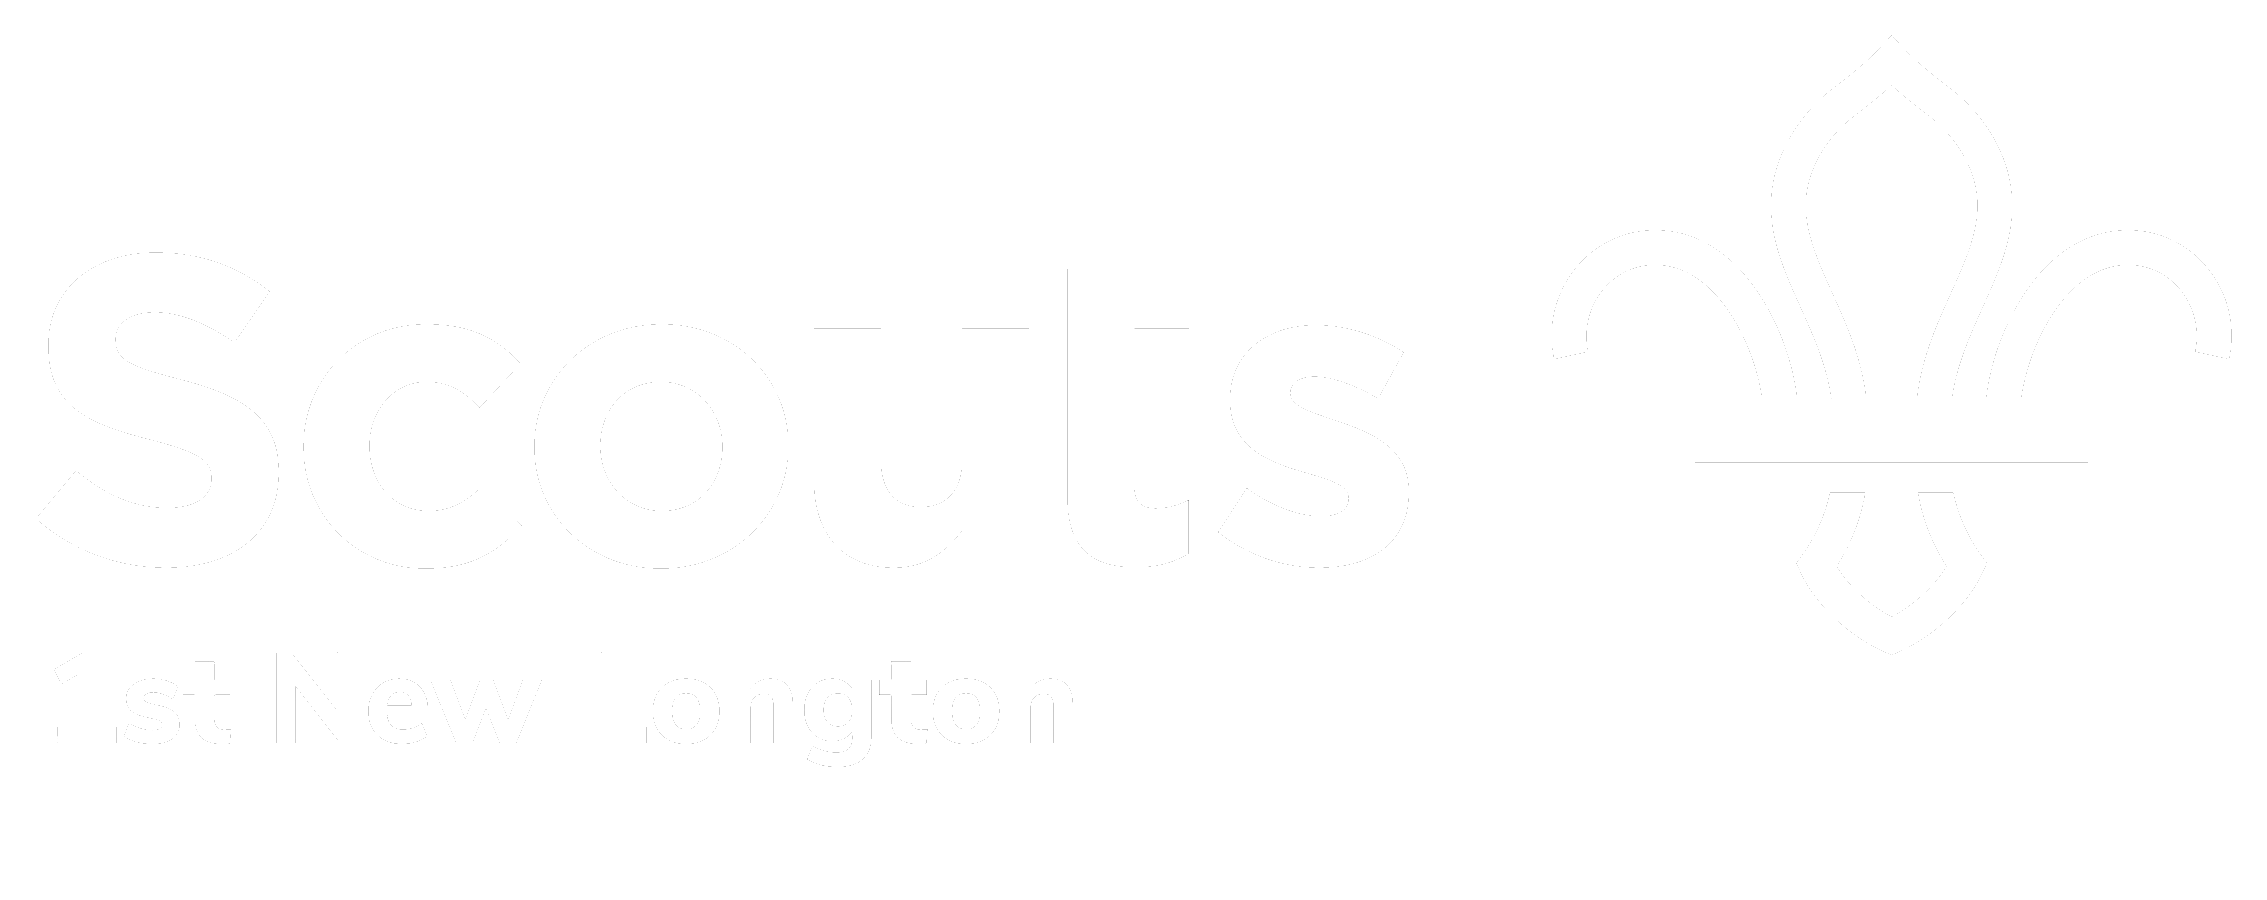 1st New Longton Scouts Logo